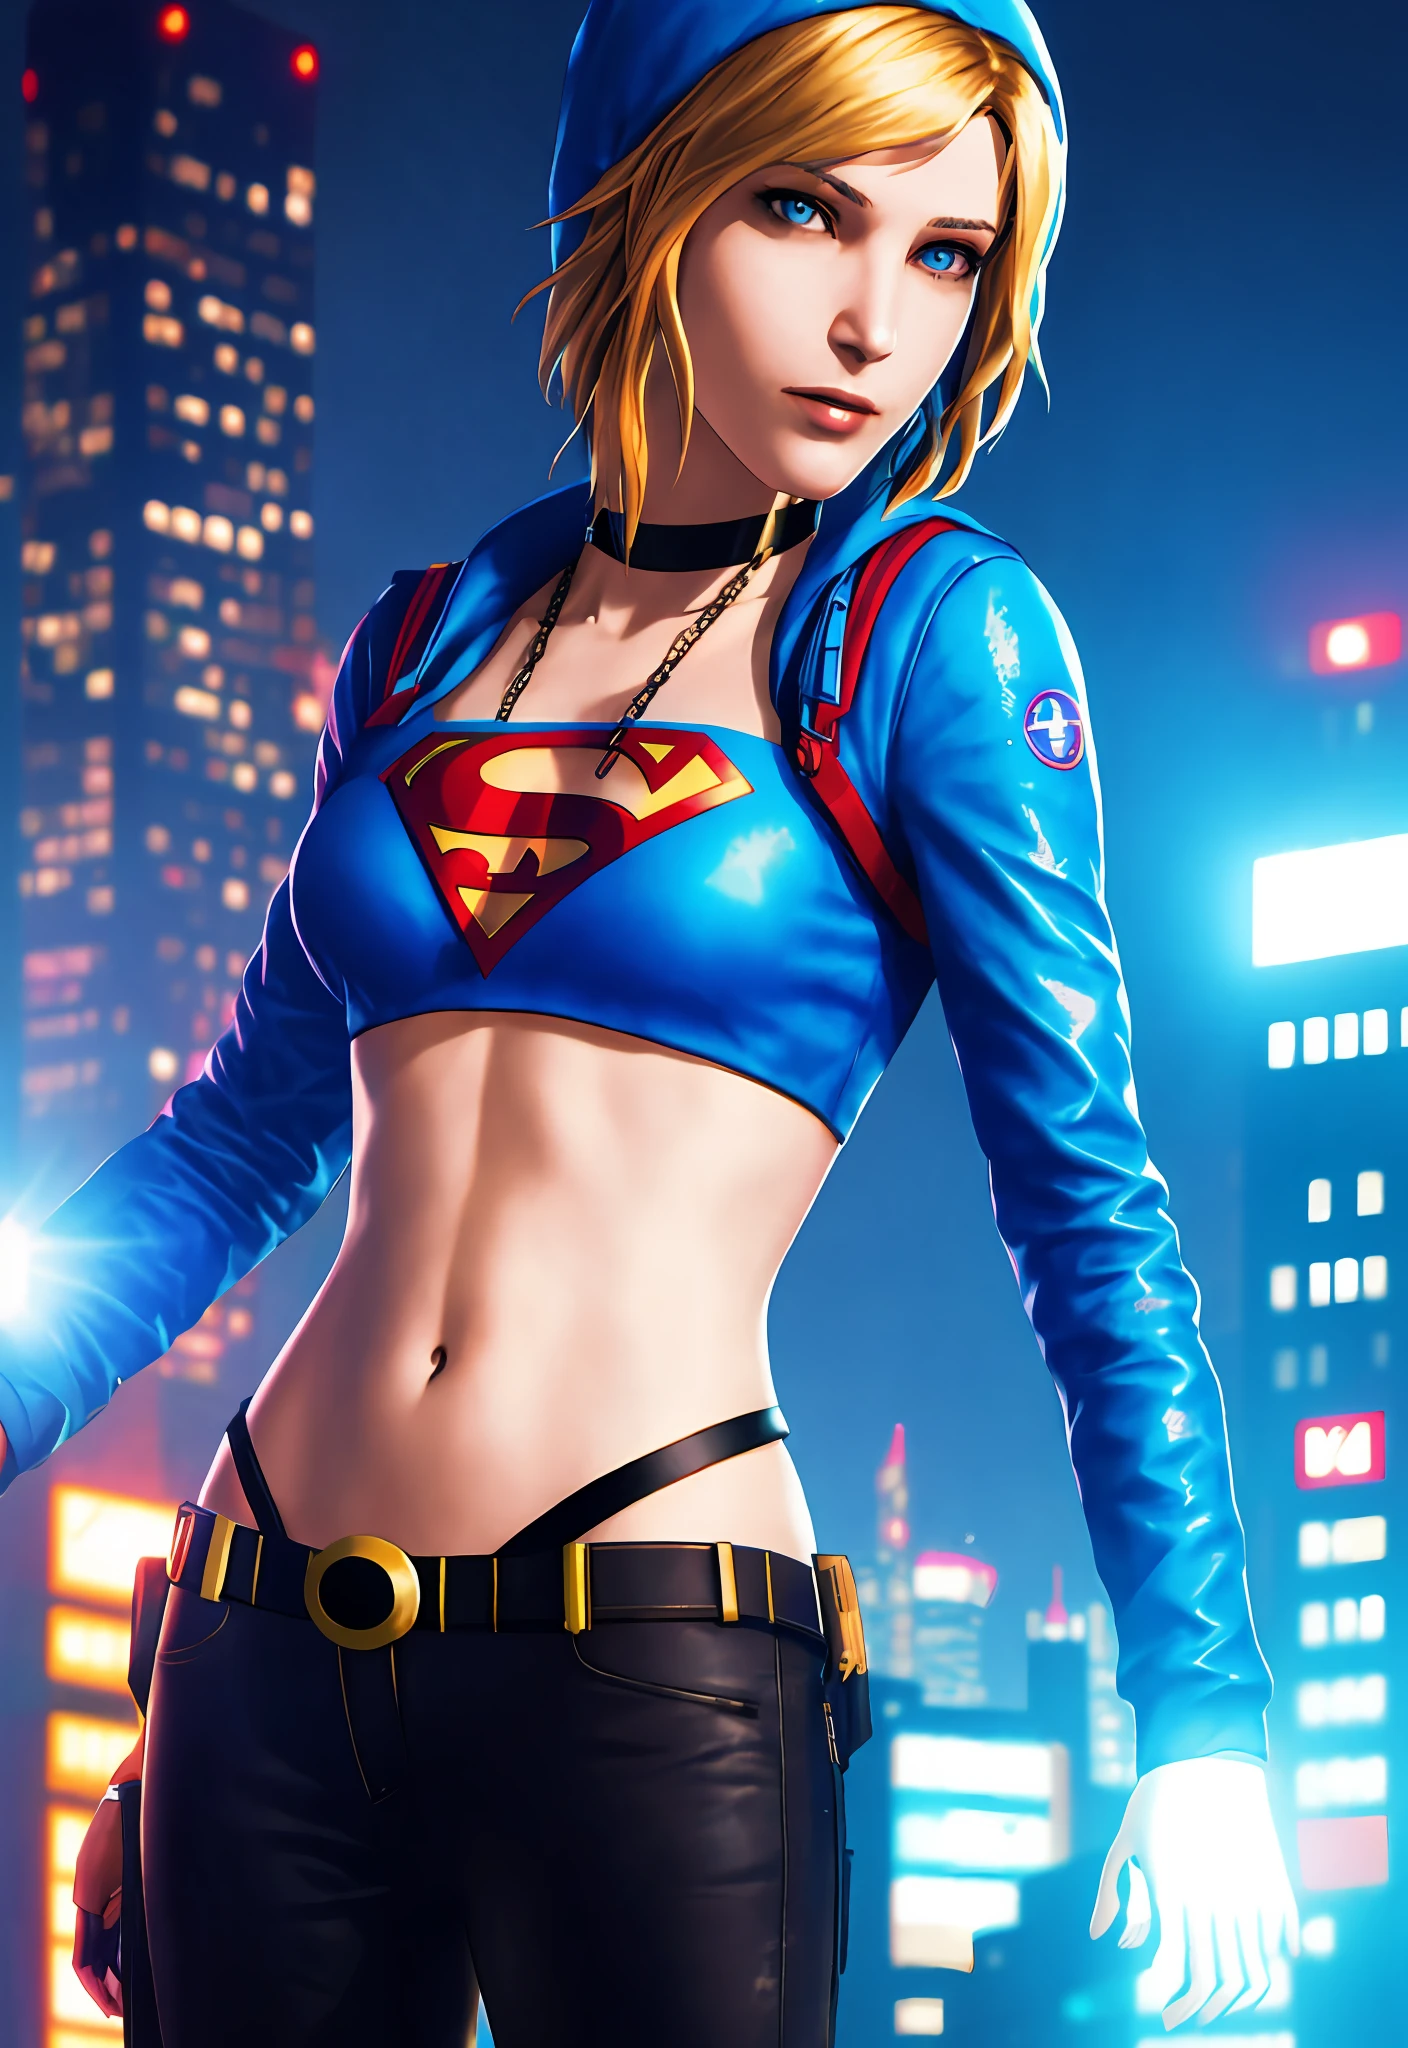 Cyberpunk supergirl, slim waist, ultra-detailed, masterpiece, high quality, cyberpunk city background, chloeprice, blonde hair, blue eyes, beanie, choker, tattos, superman s on chest, beautiful girl